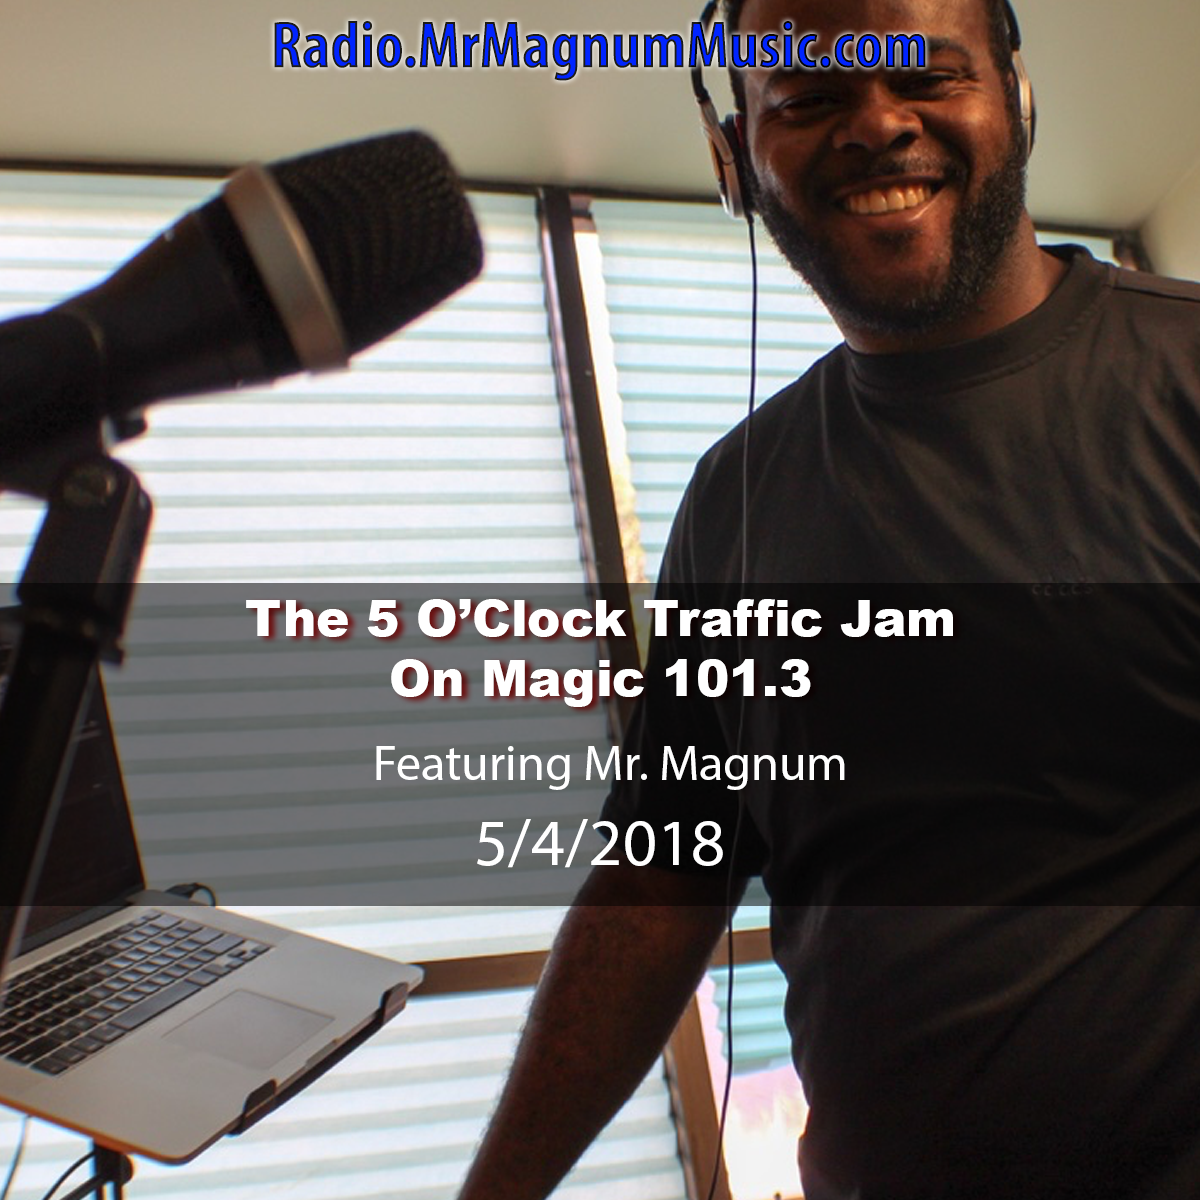 5 O’Clock Traffic Jam 5-11-2018 on Magic 101.3